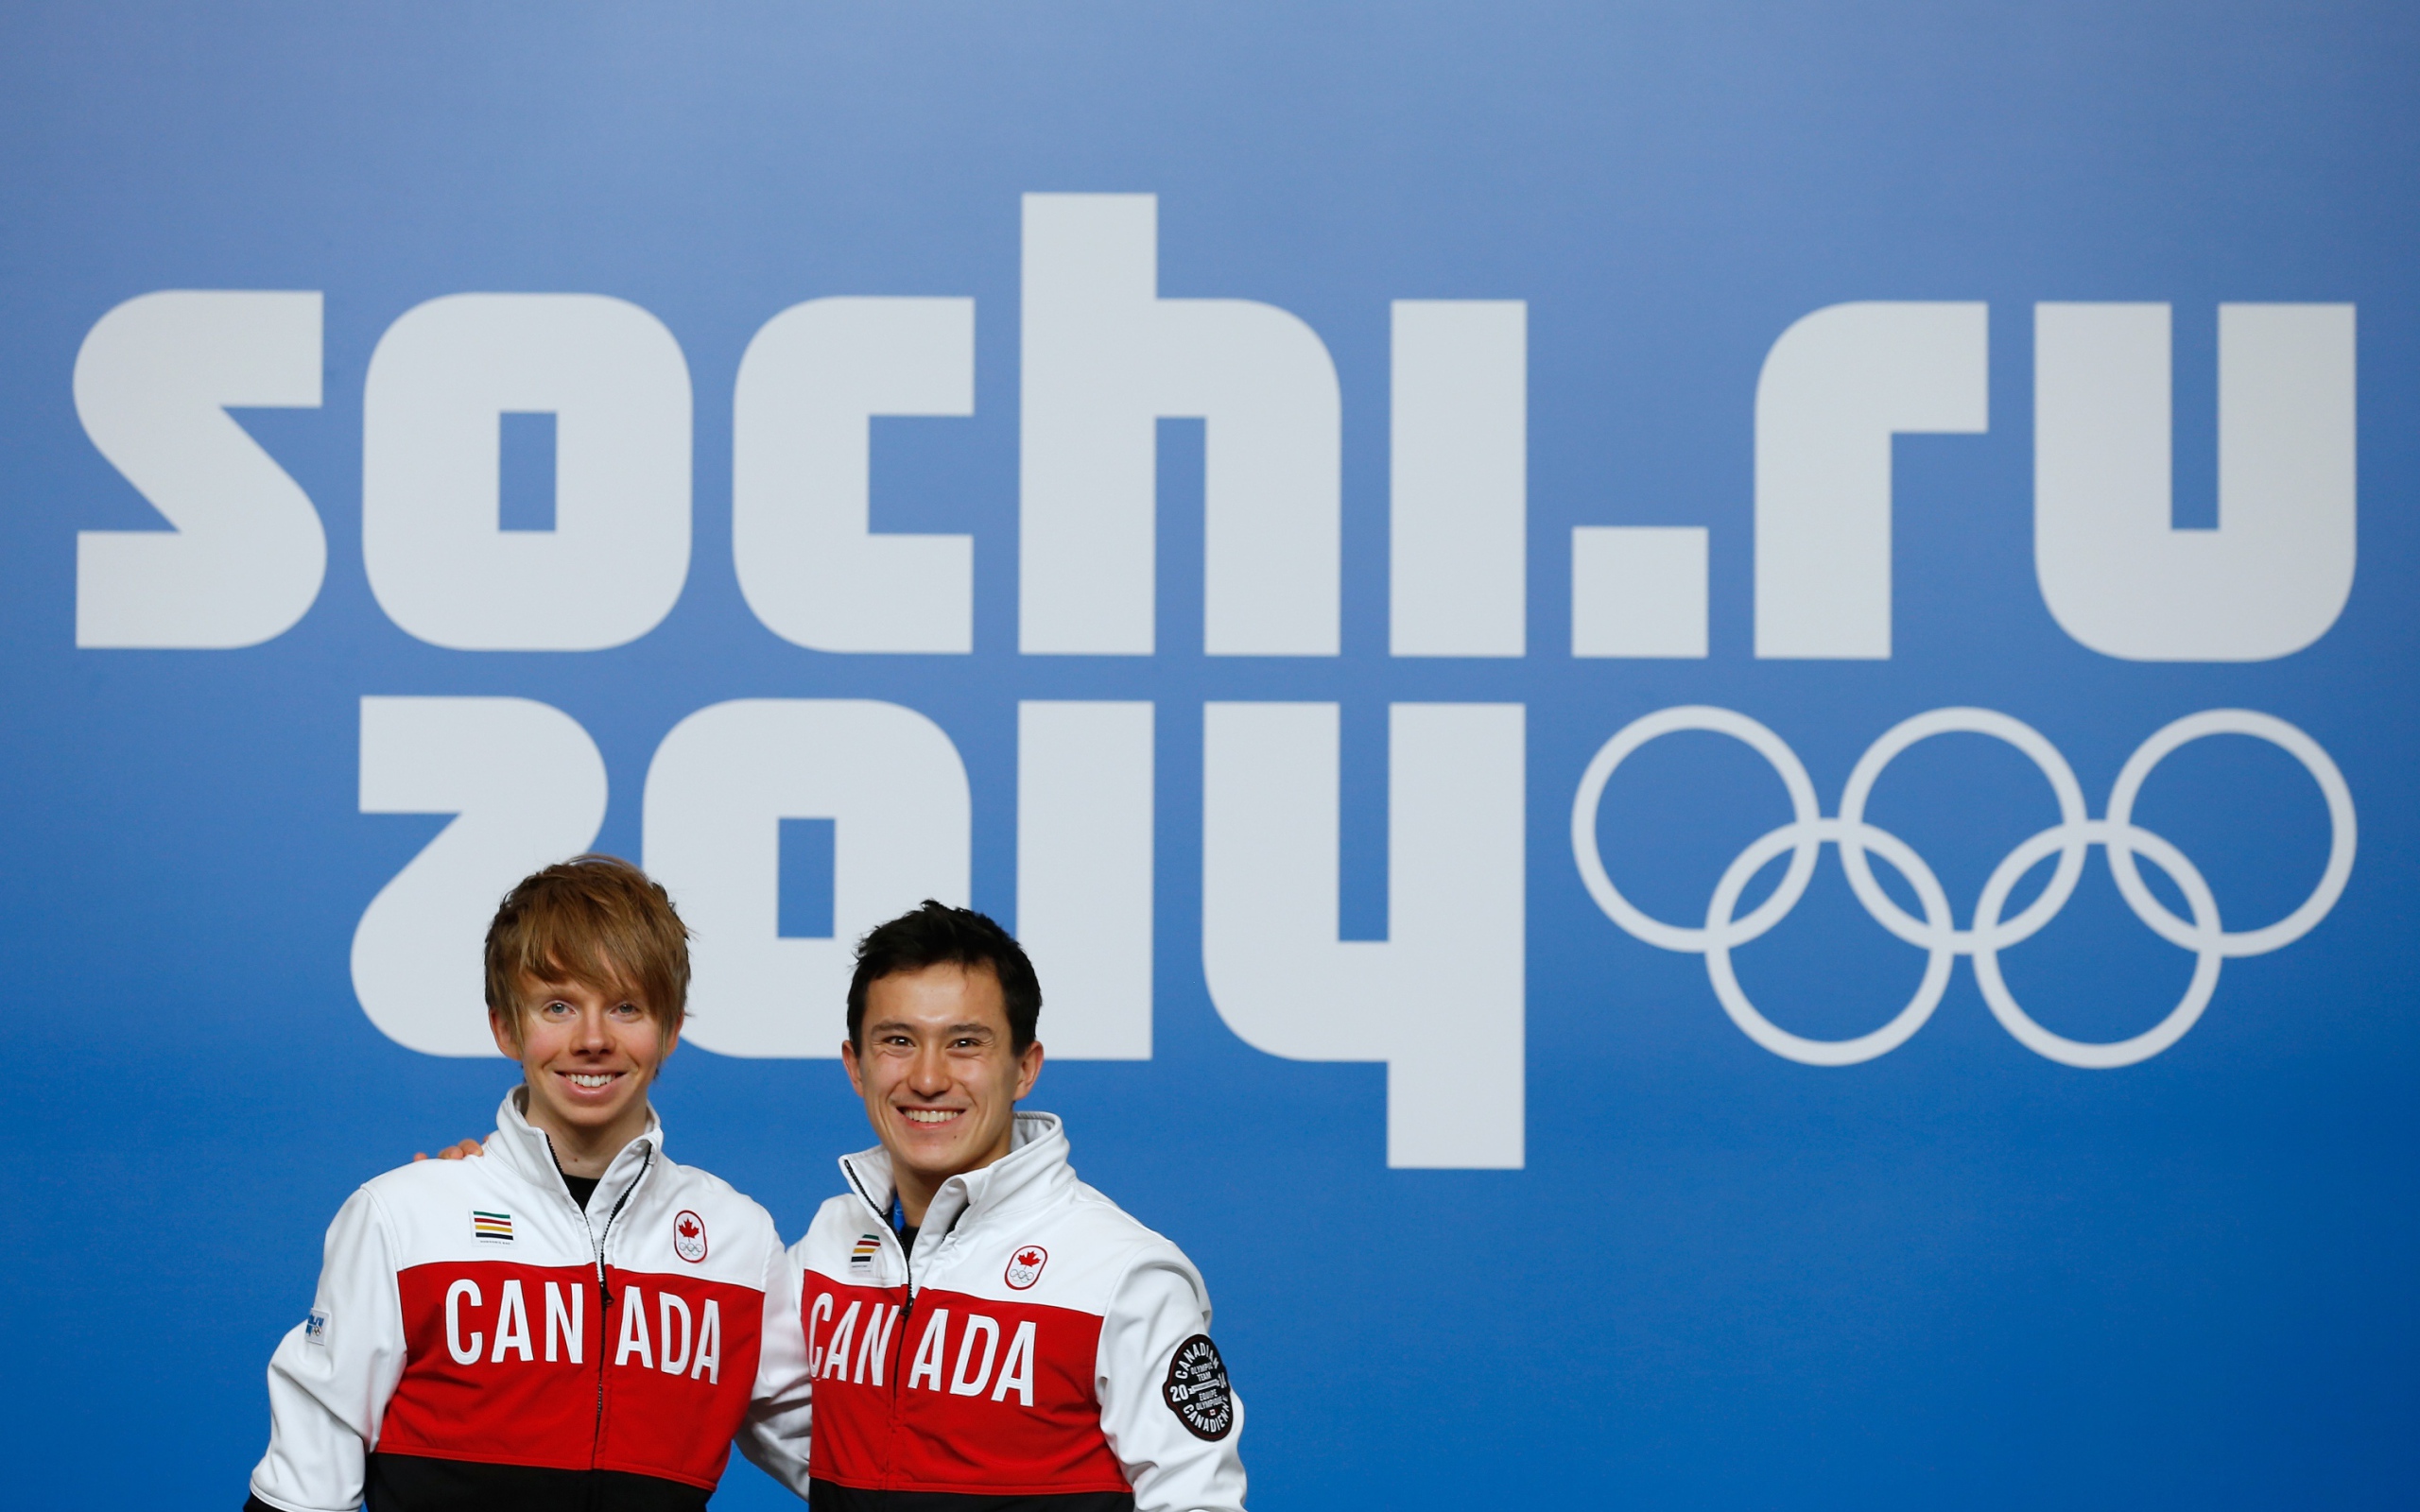 Canadian skater Kevin Reynolds winner of the silver medal in Sochi